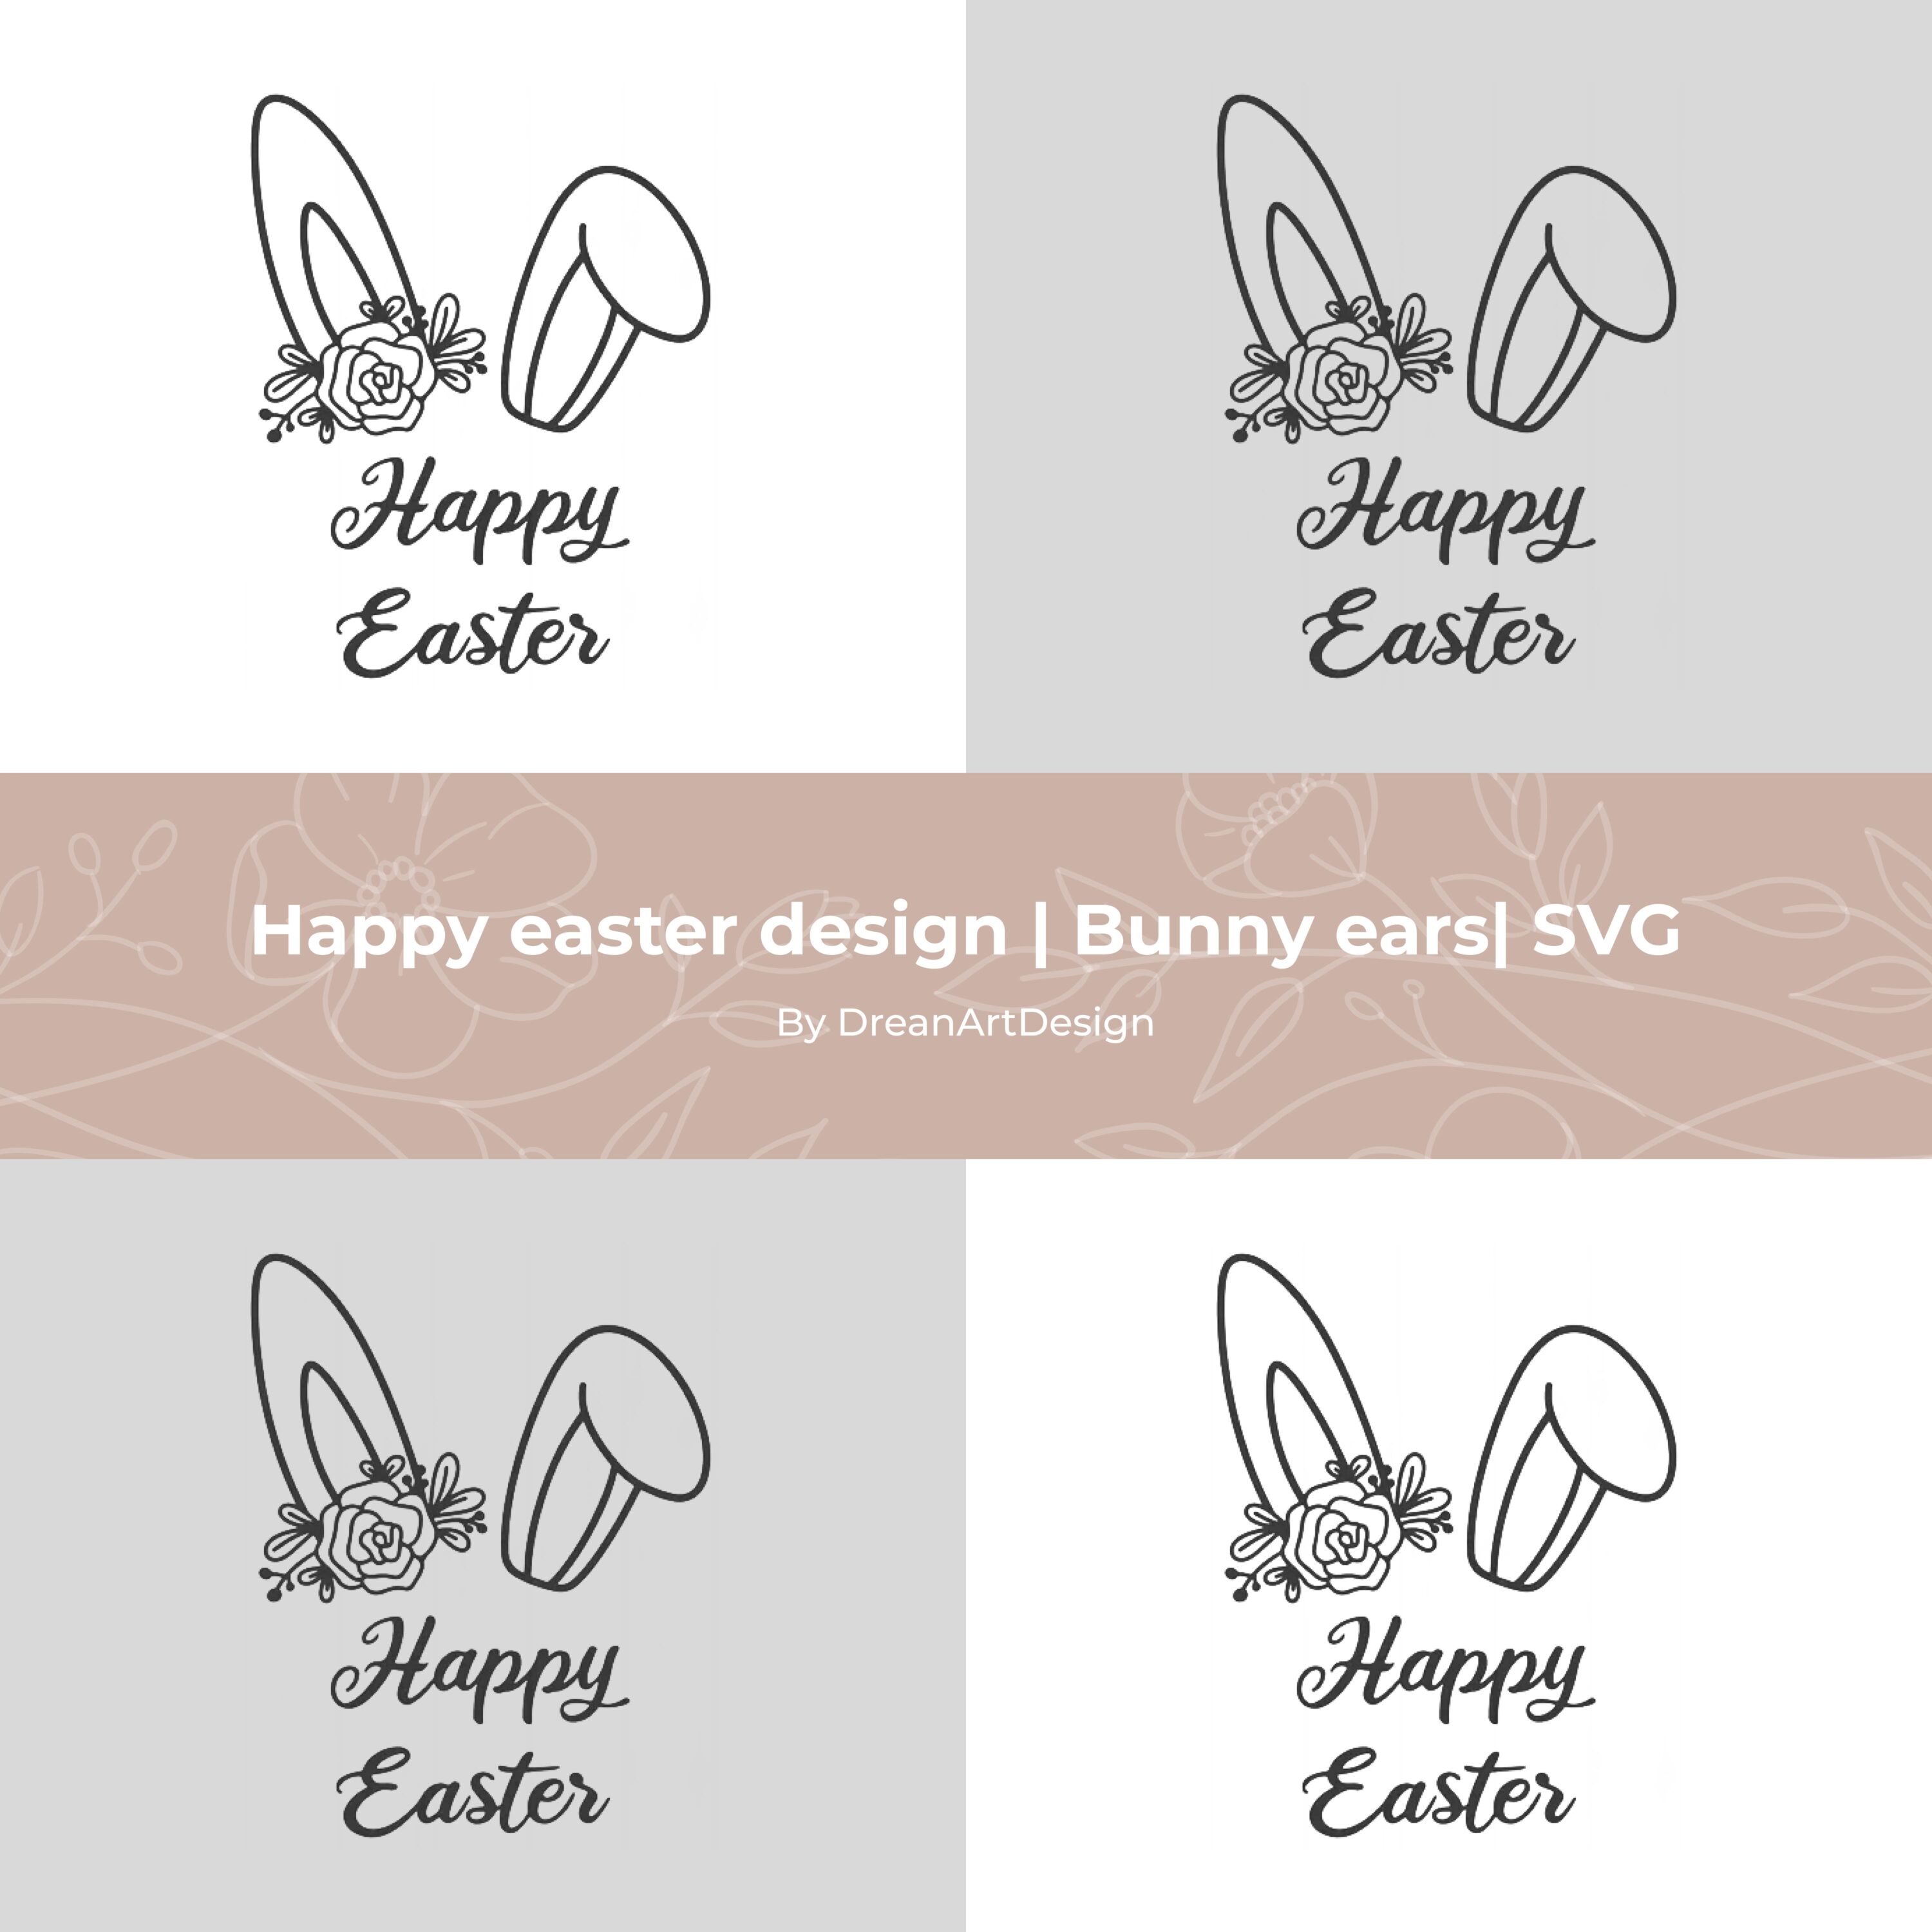 Happy easter design | Bunny ears| SVG.